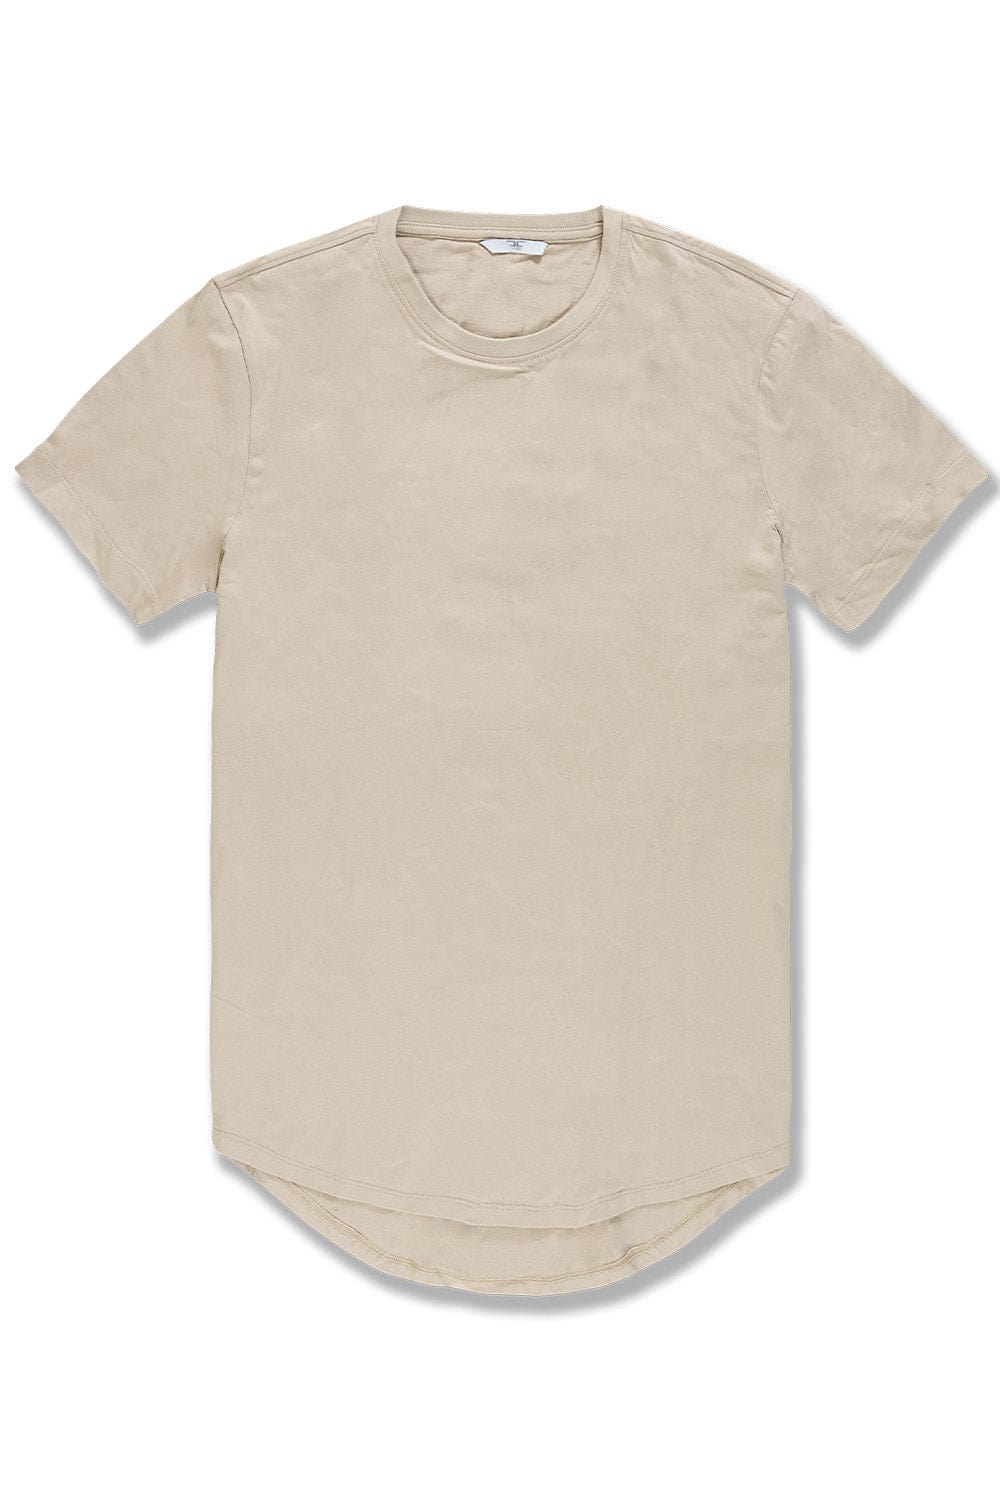 Jordan Craig Scallop T-Shirt Natural Sand / S